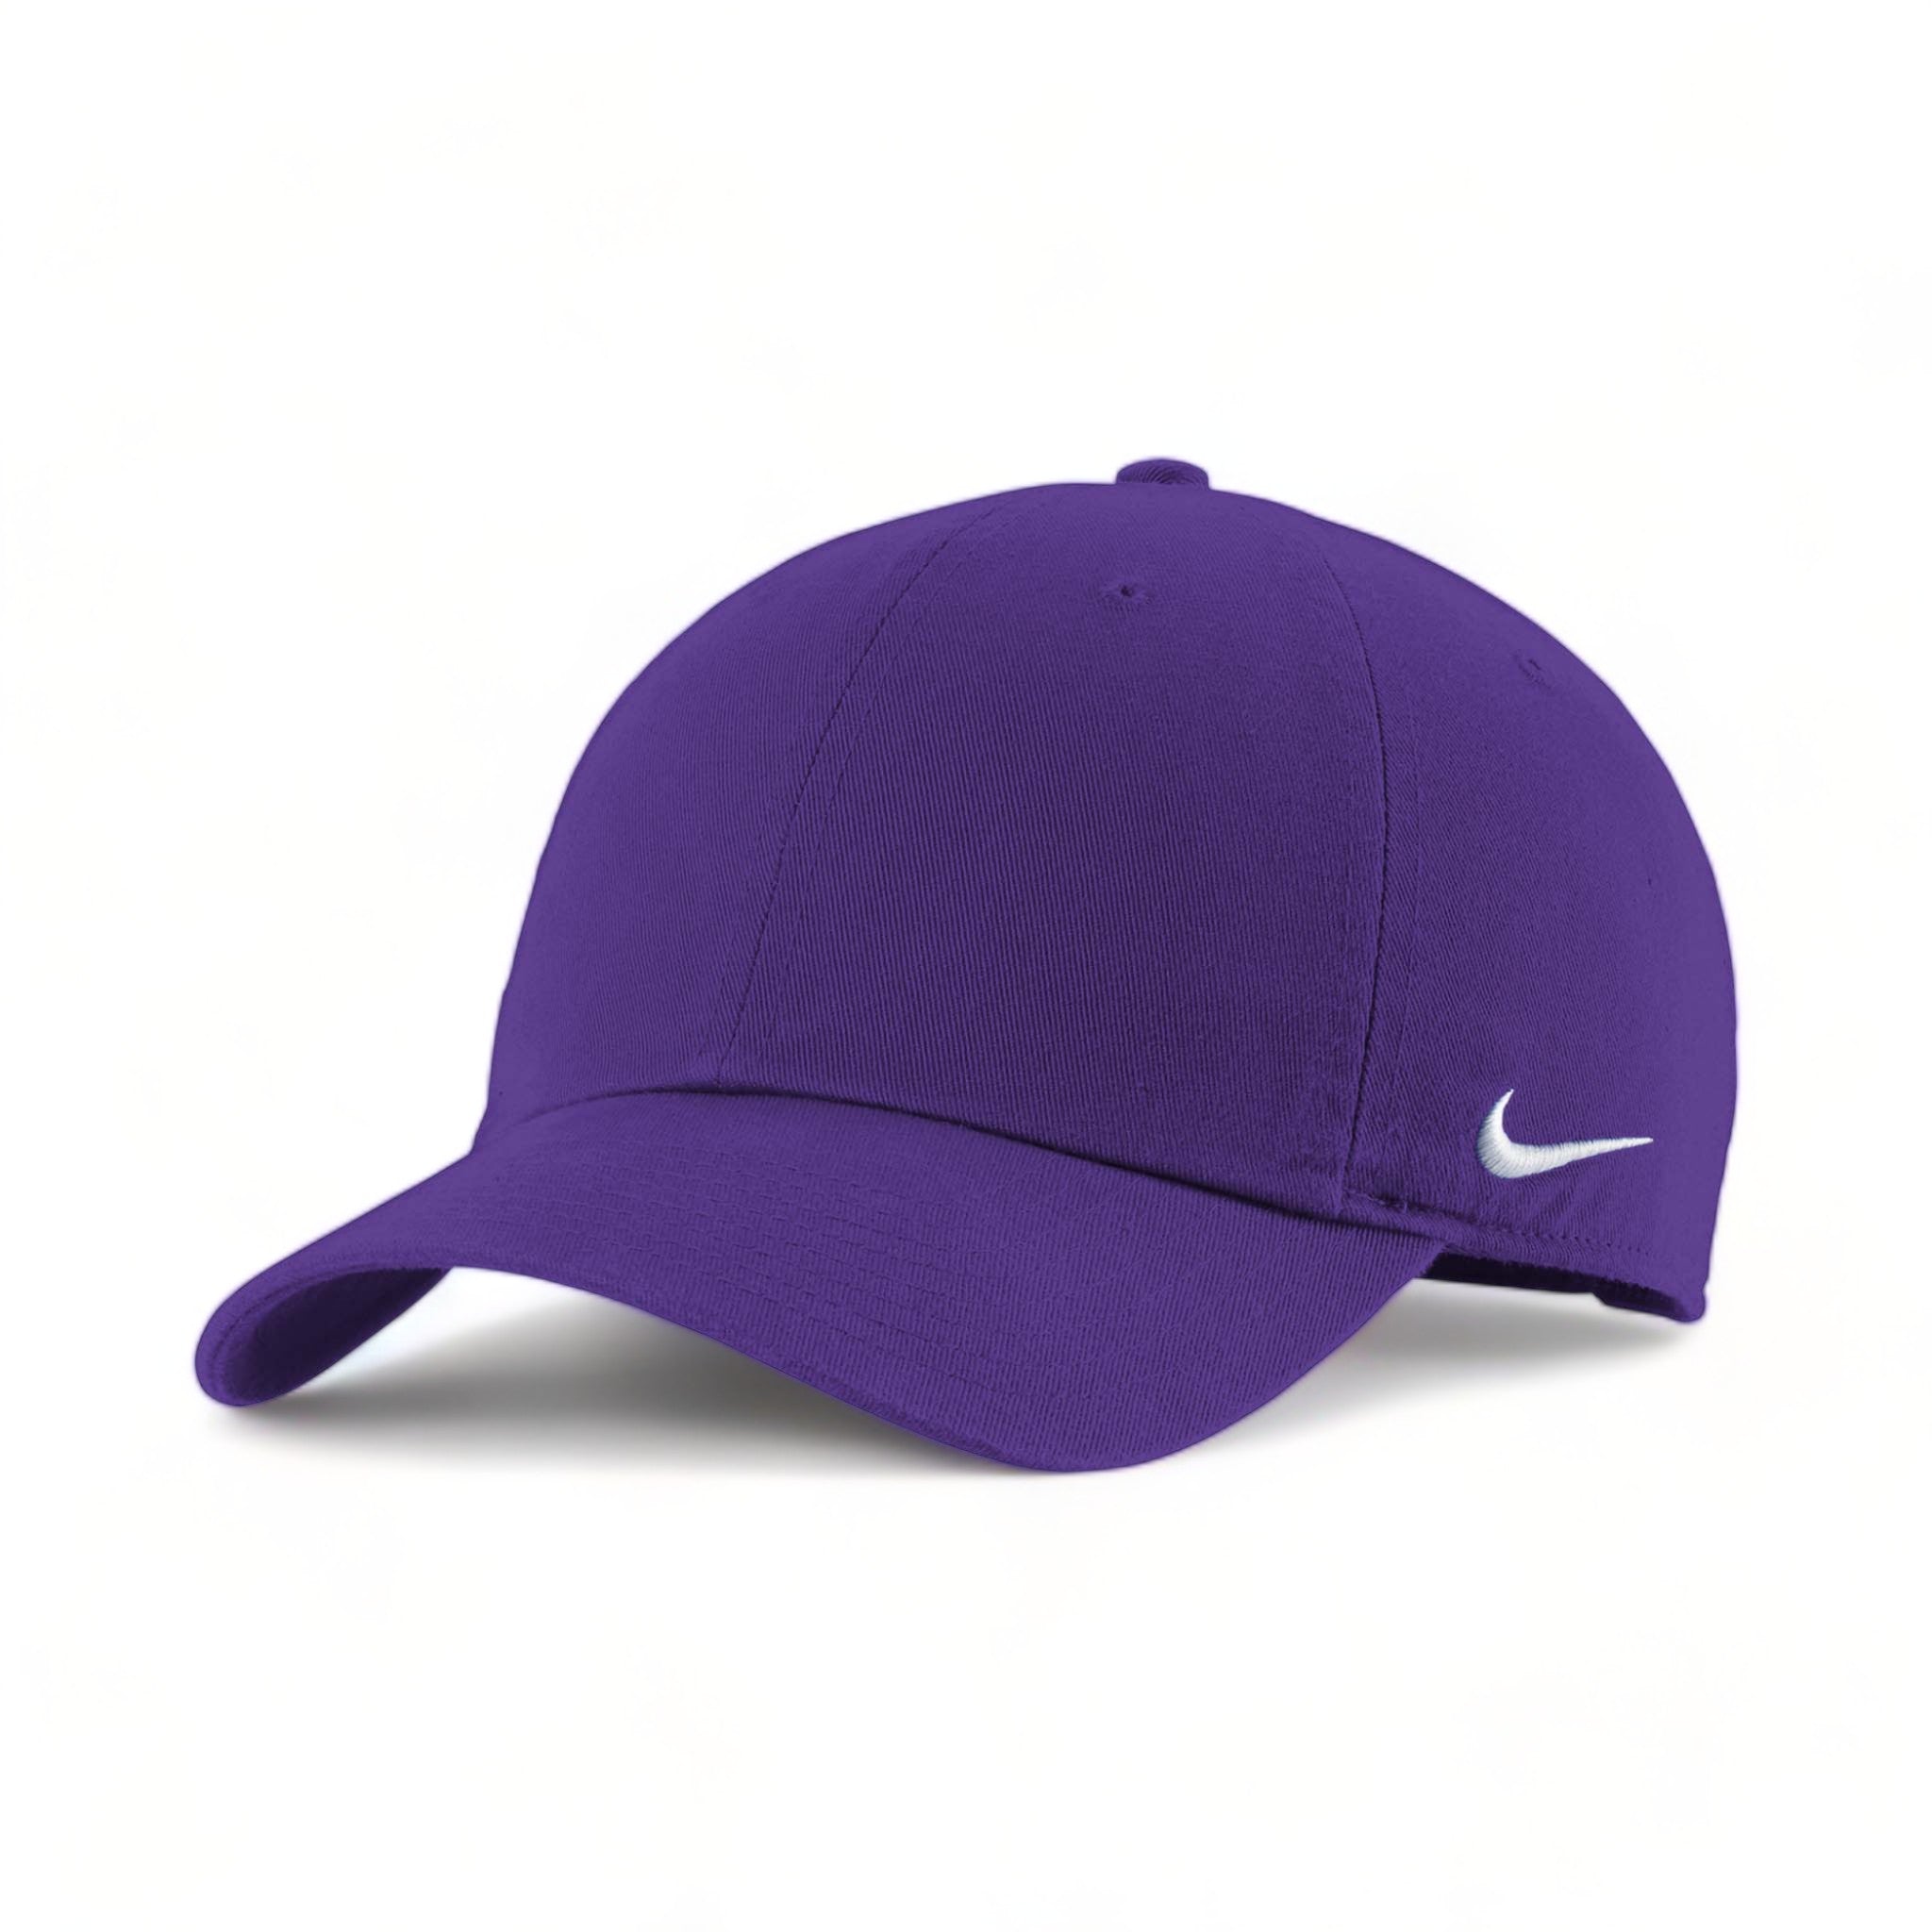 Custom Nike Heritage Cotton Twill Hat